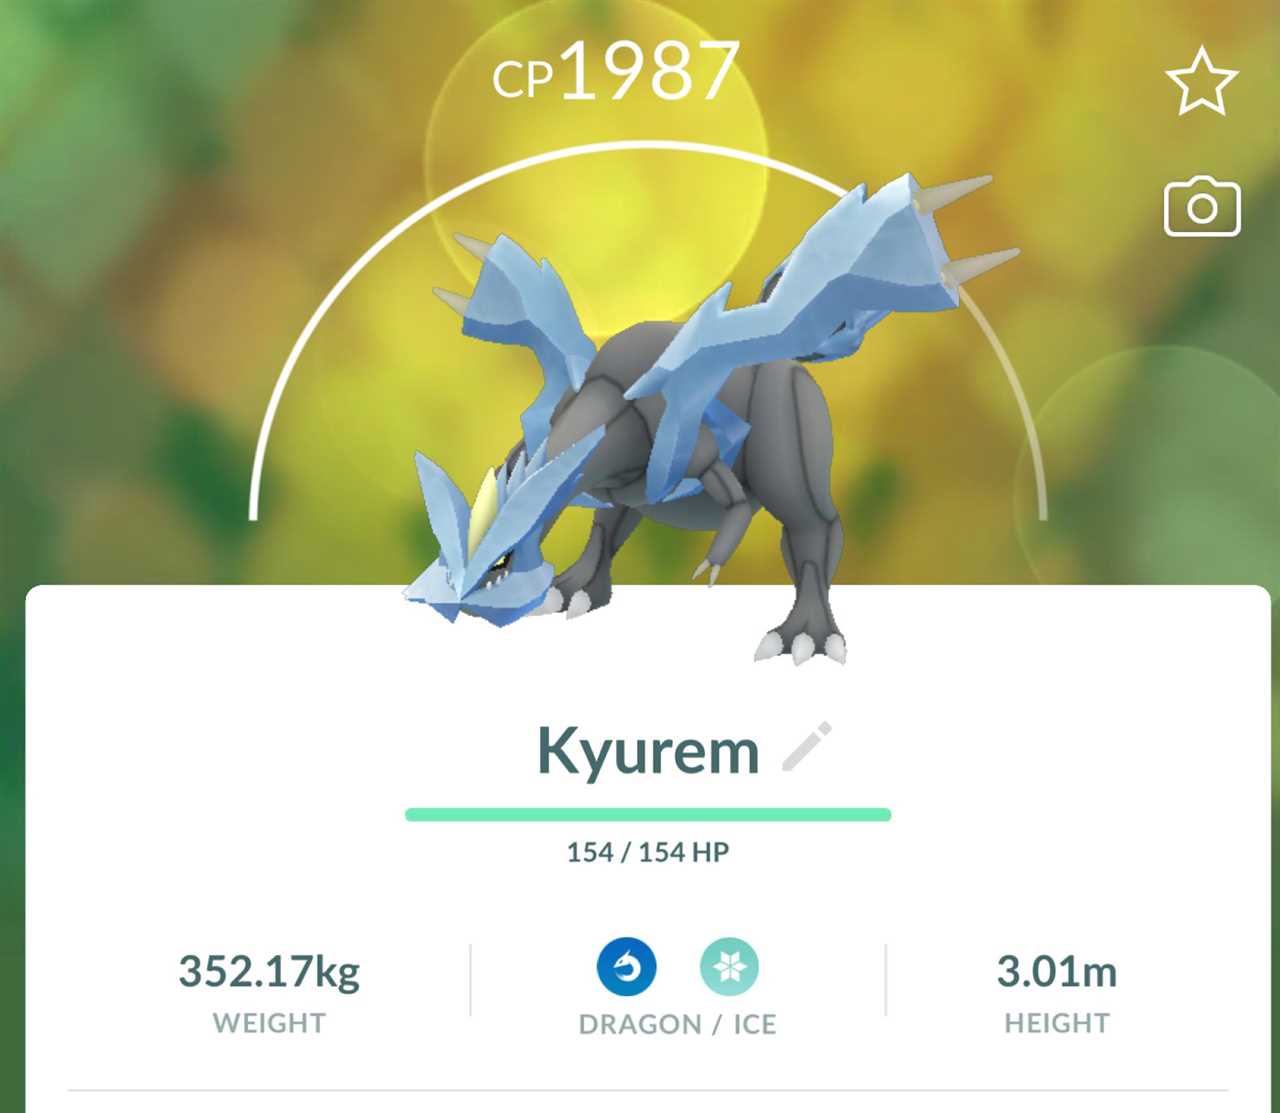 Kyurem will enter Pokémon Go into the New Year